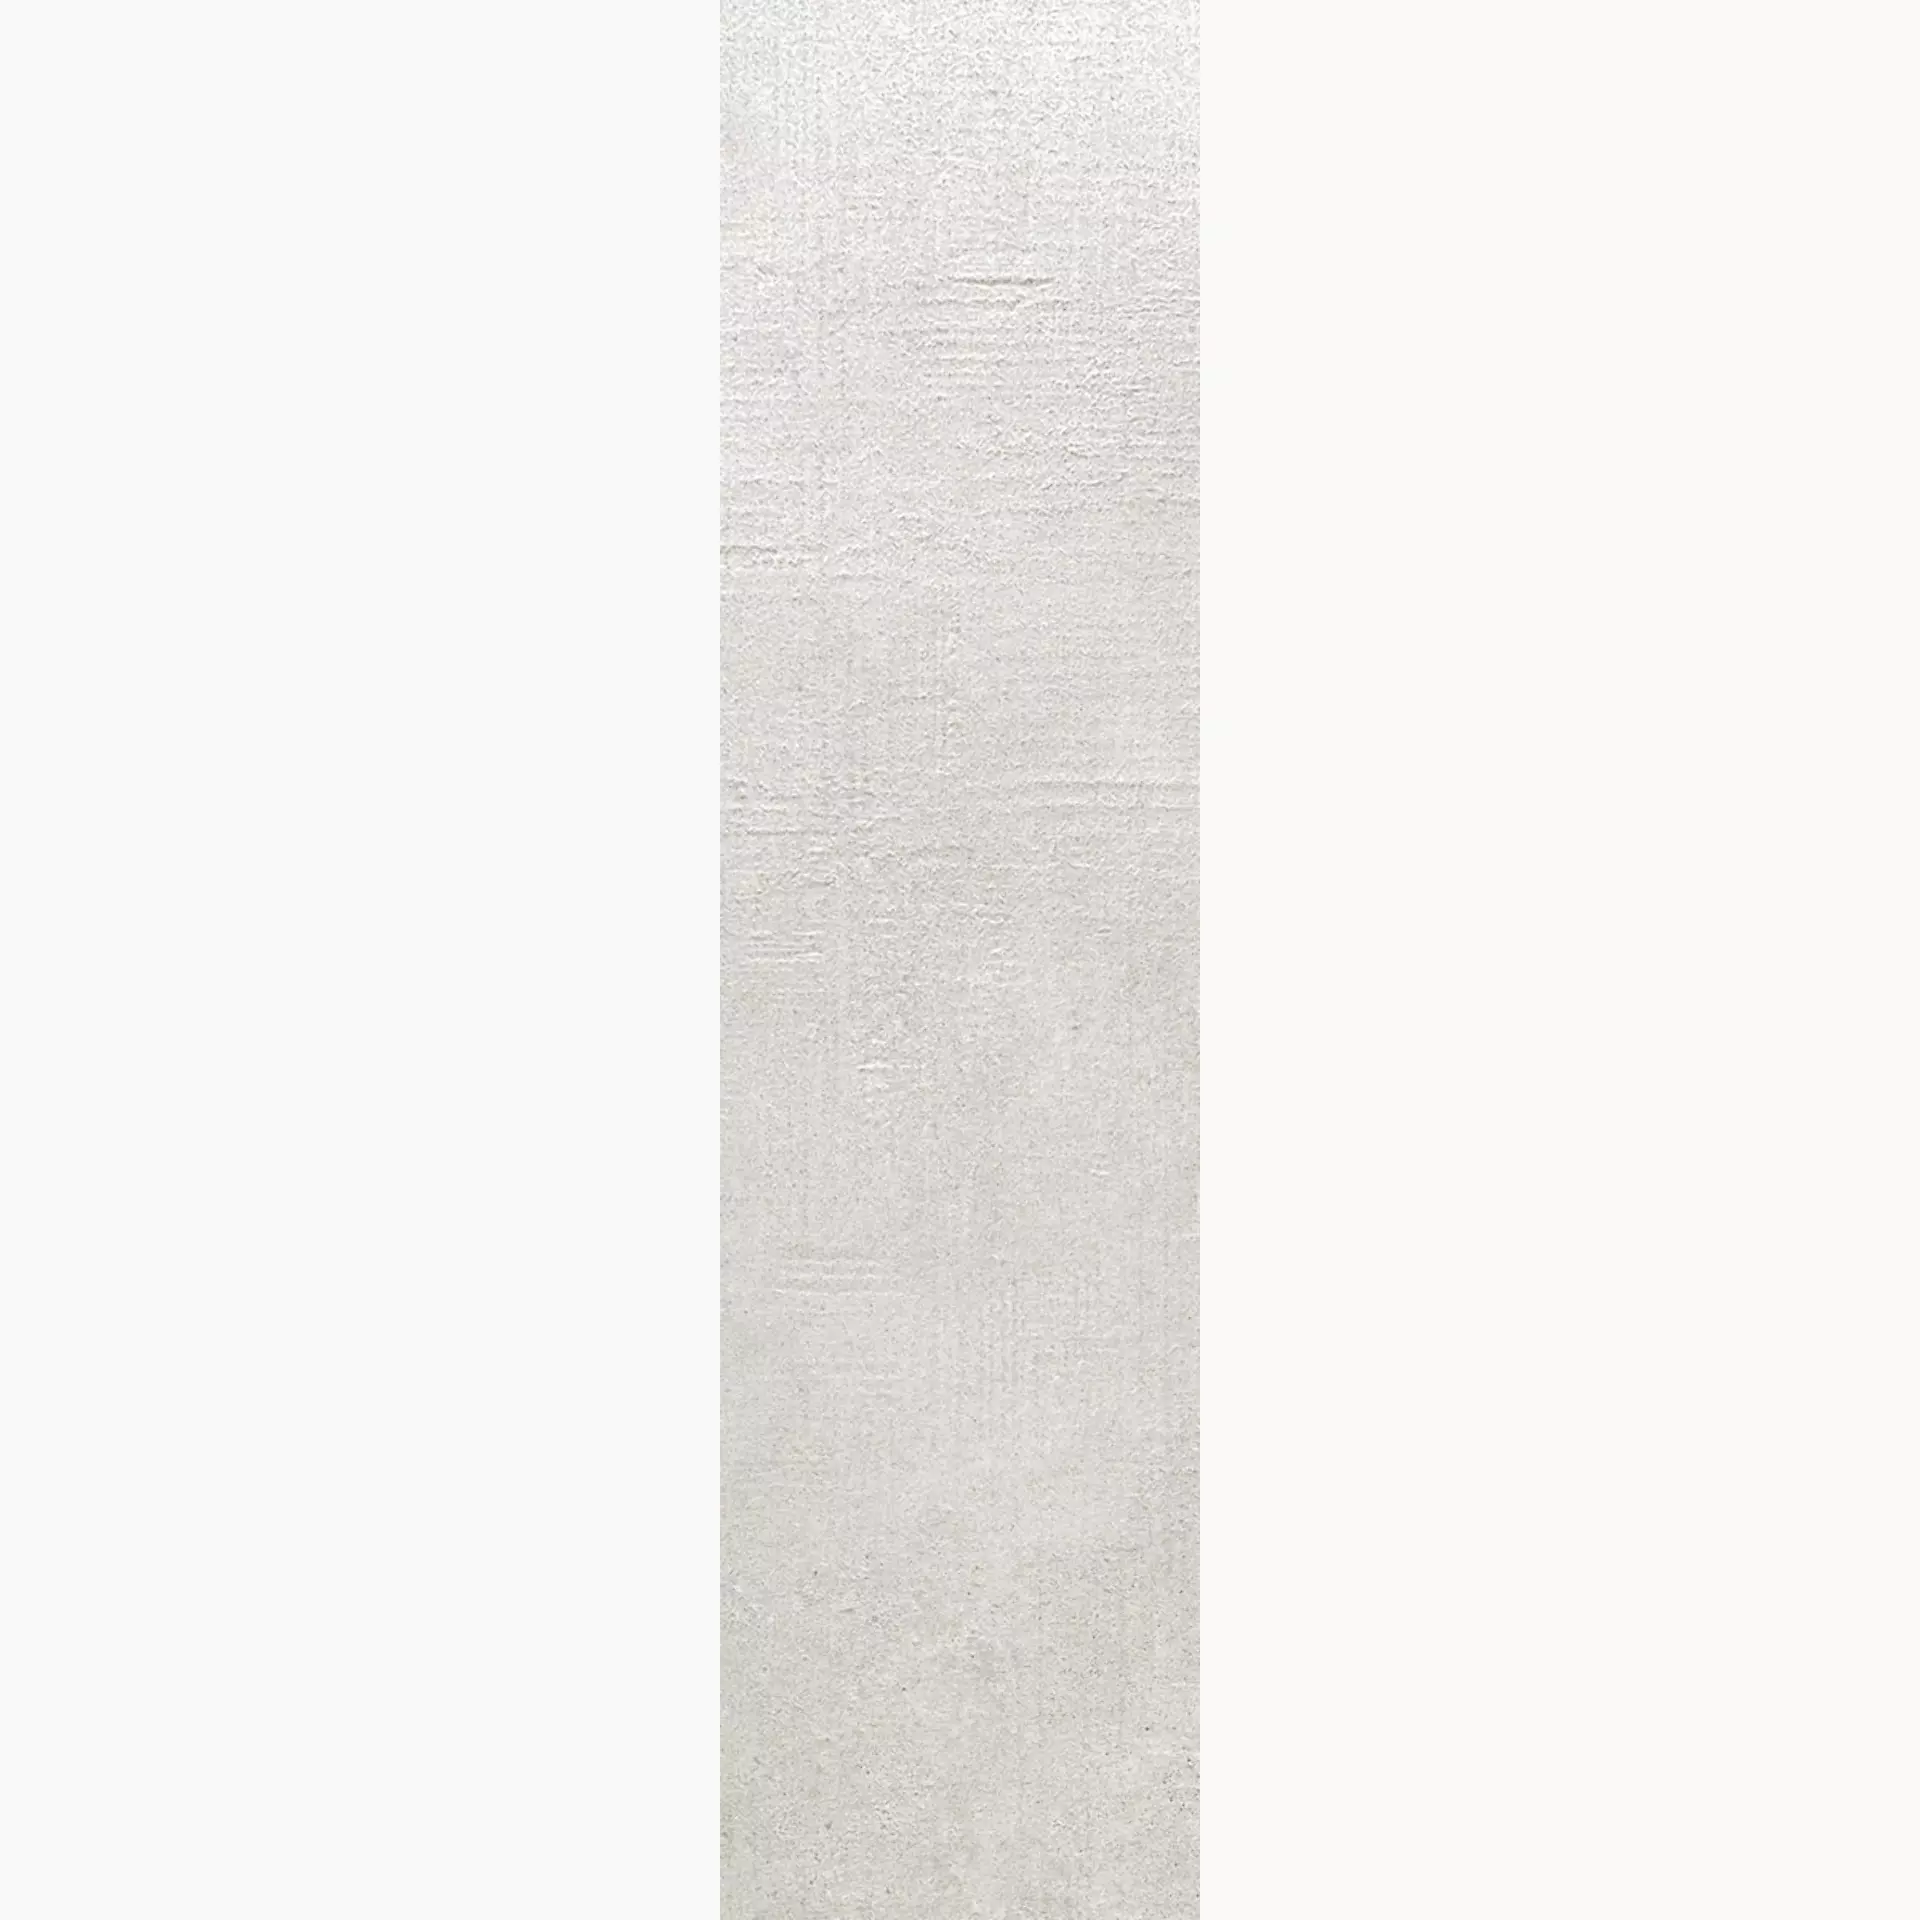 Rondine Loft White Strutturato J89100 20x80cm rectified 8,5mm